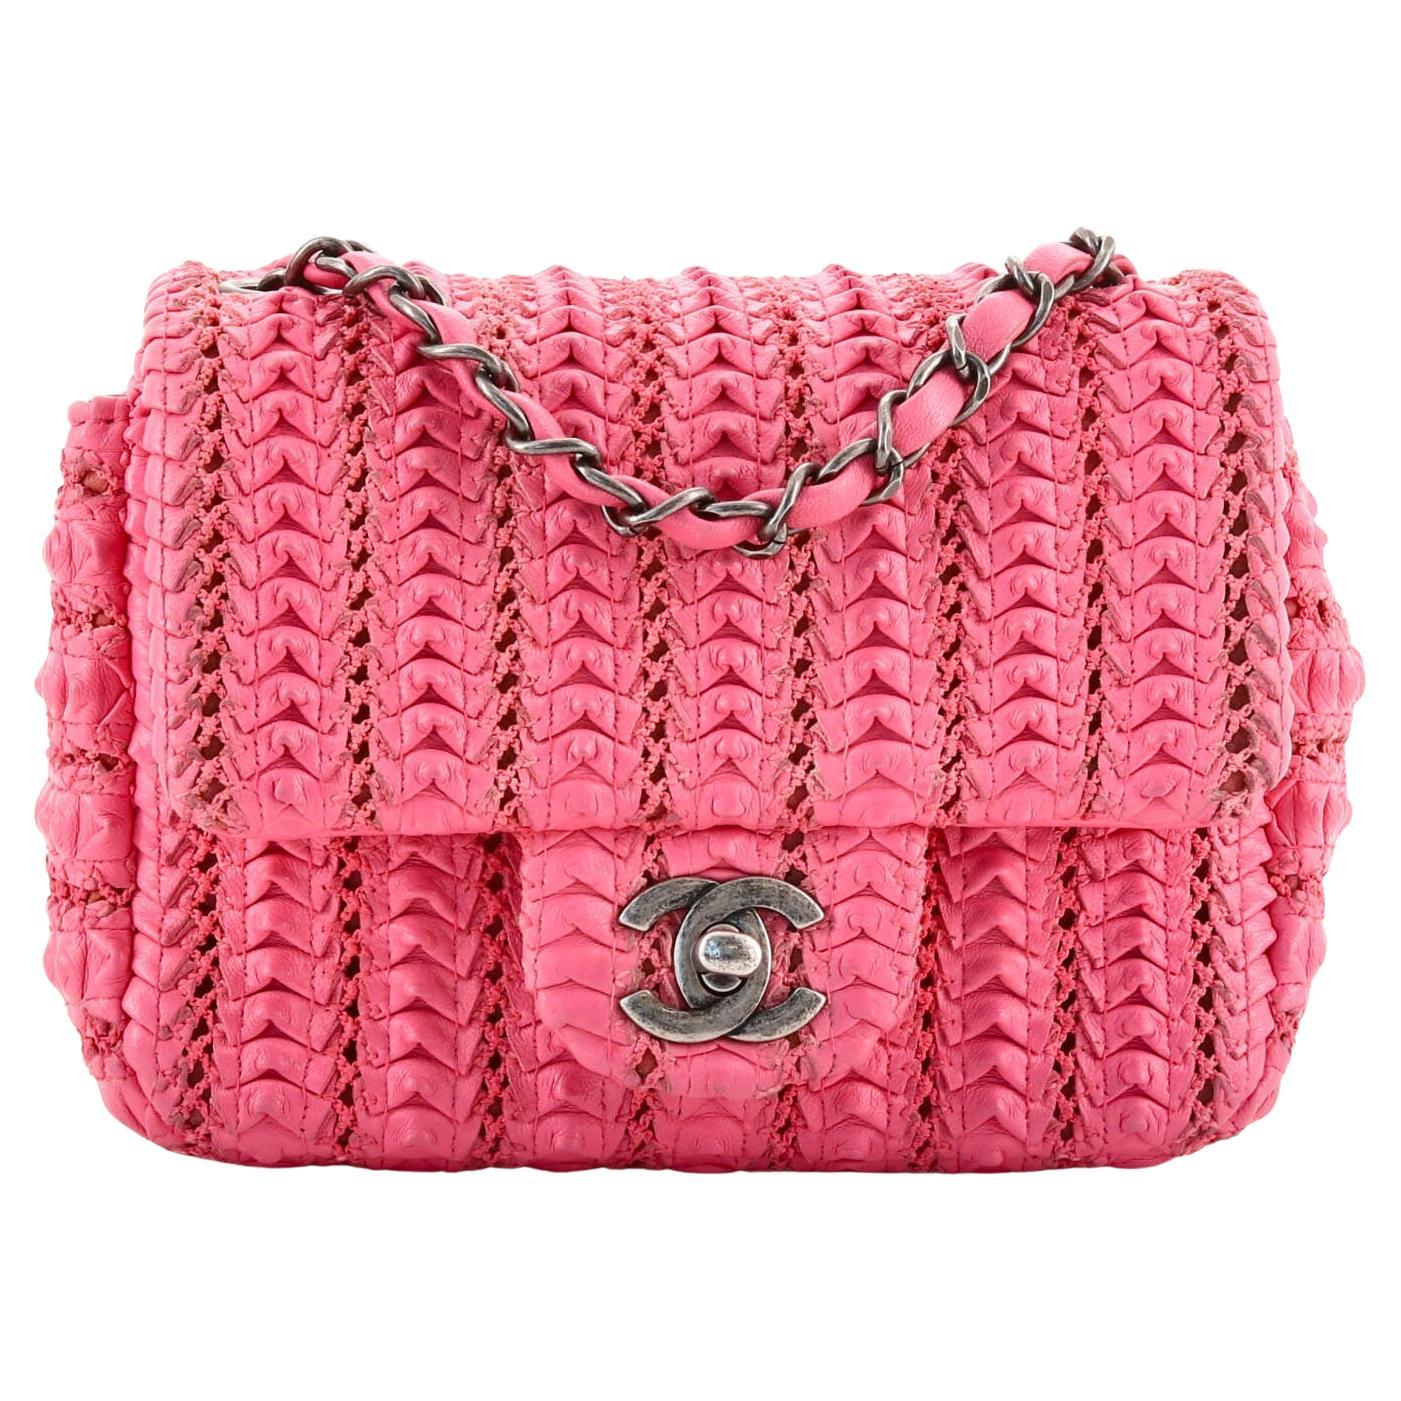 Chanel Boy Brick Lego Boy Chain Shoulder Bag Pink Patent Leather